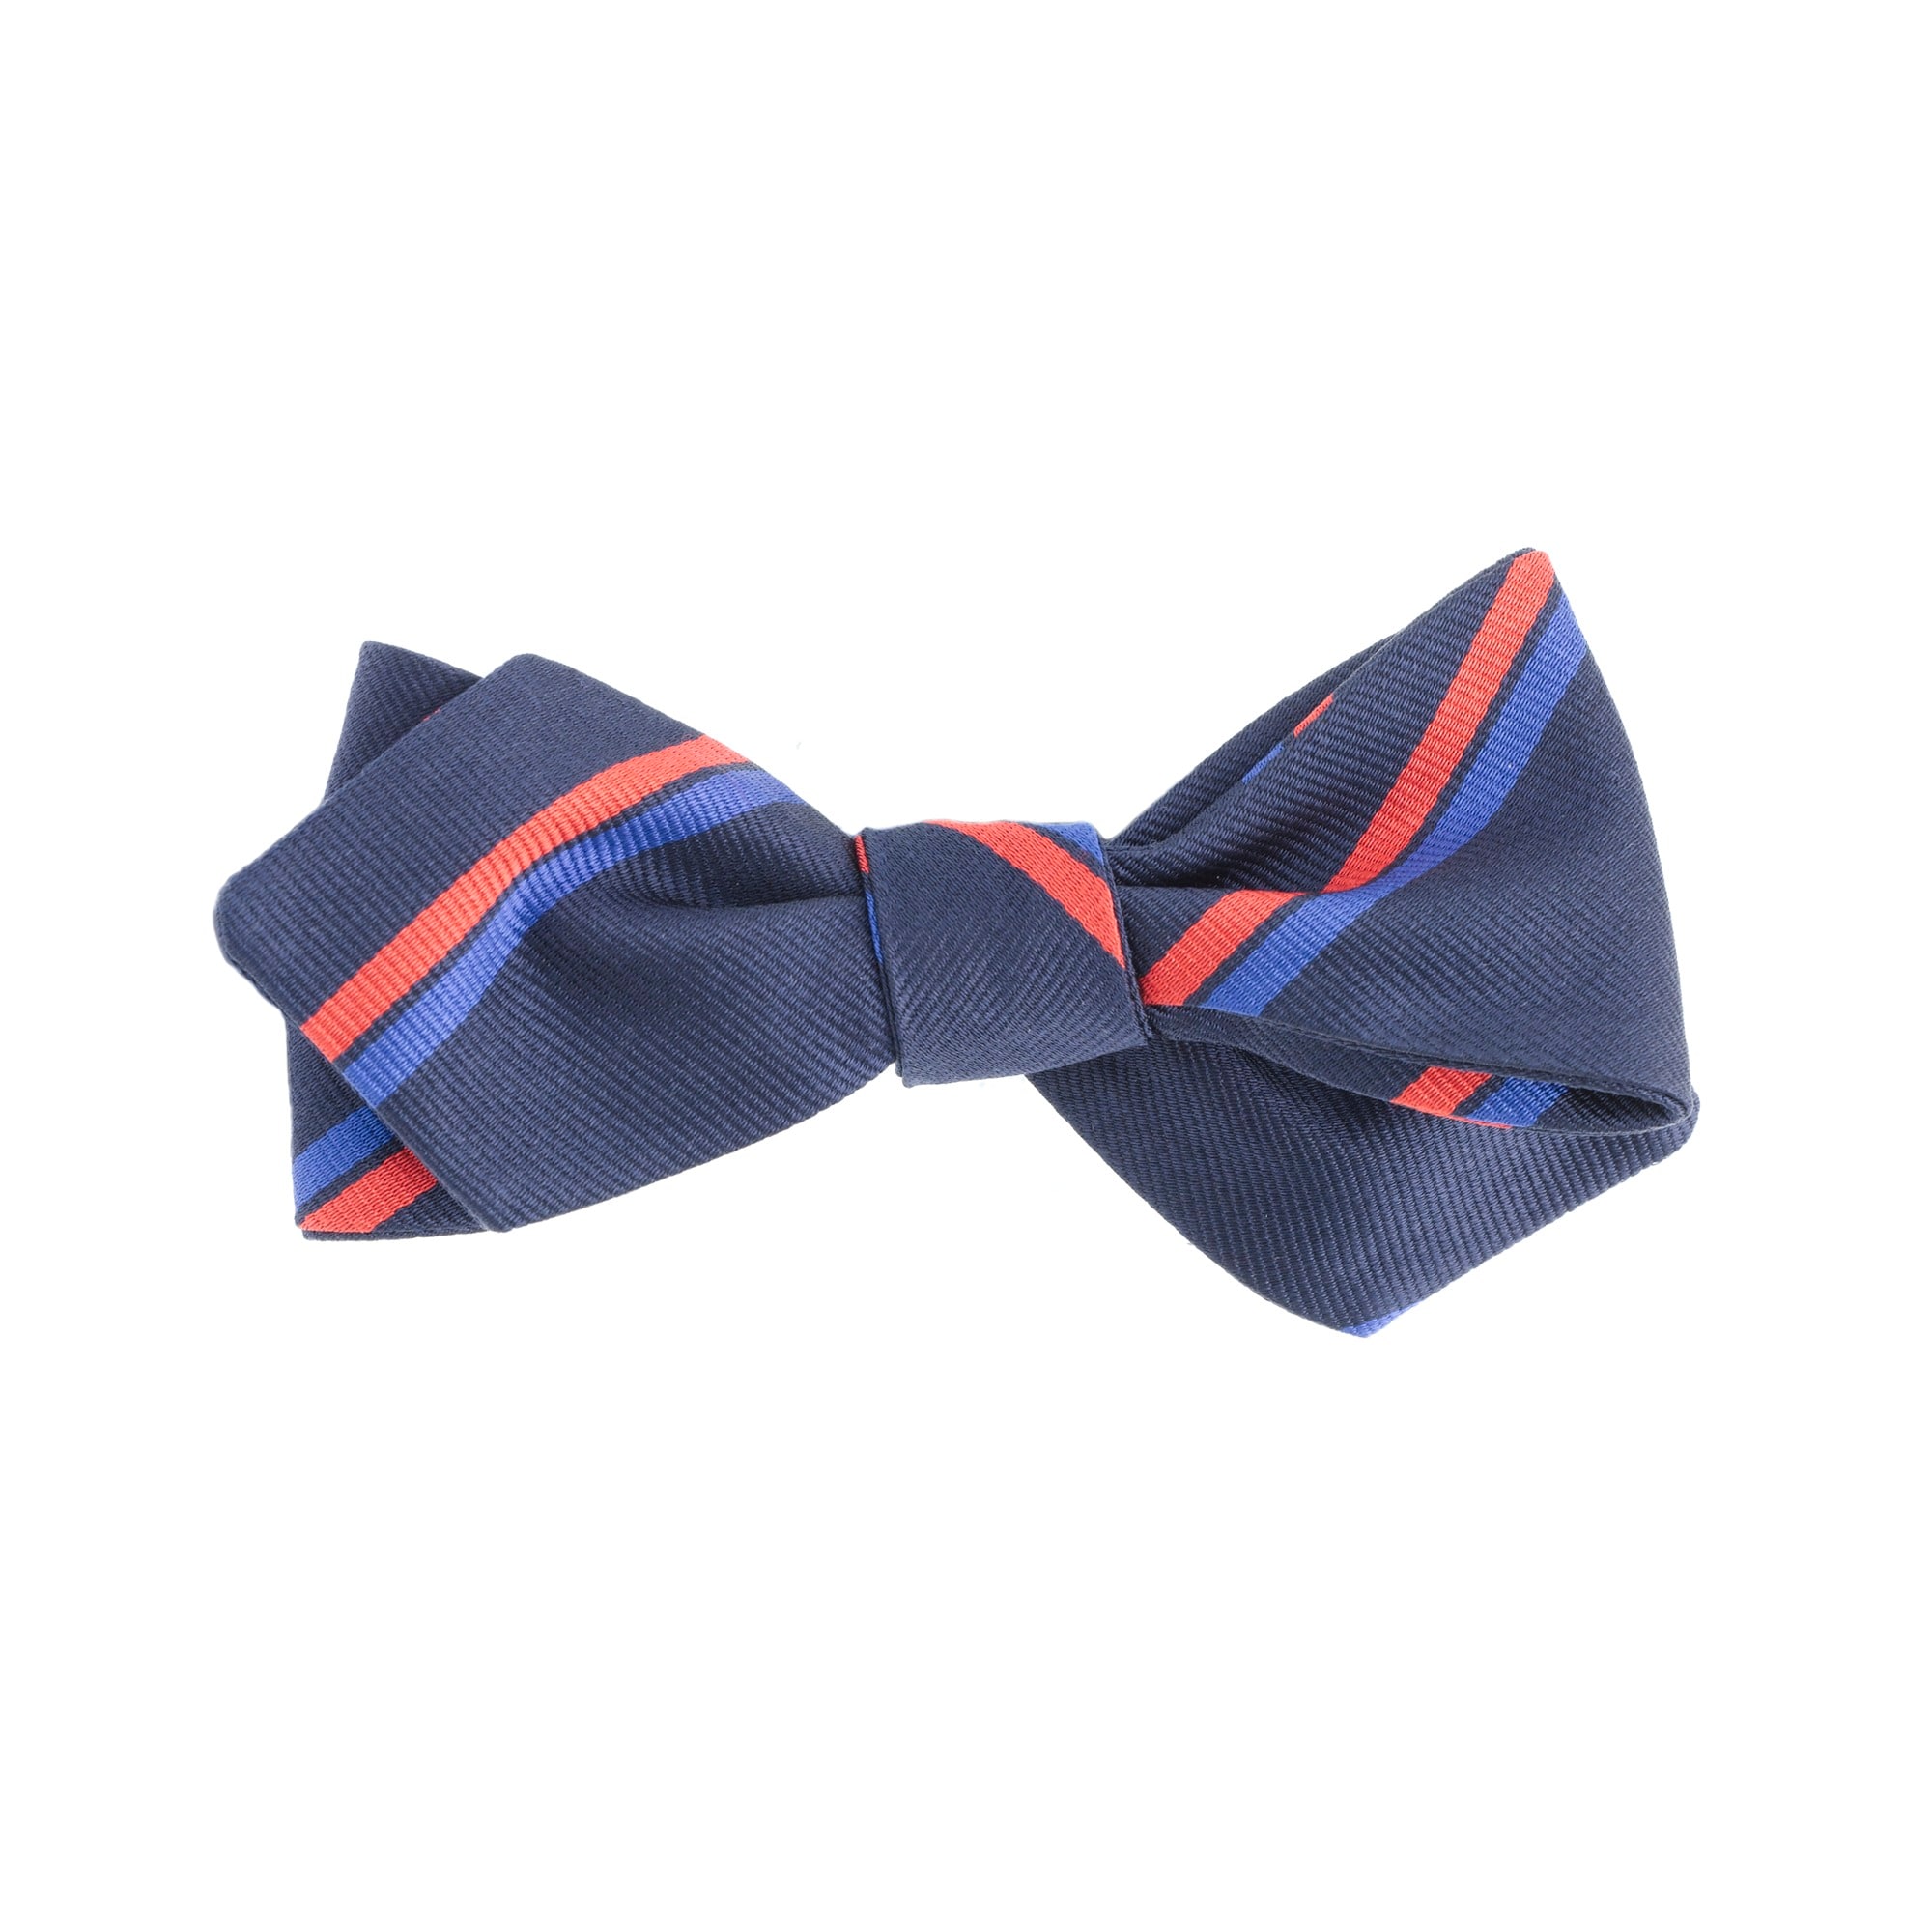 Stripe silk bow tie : Men bow ties | J.Crew